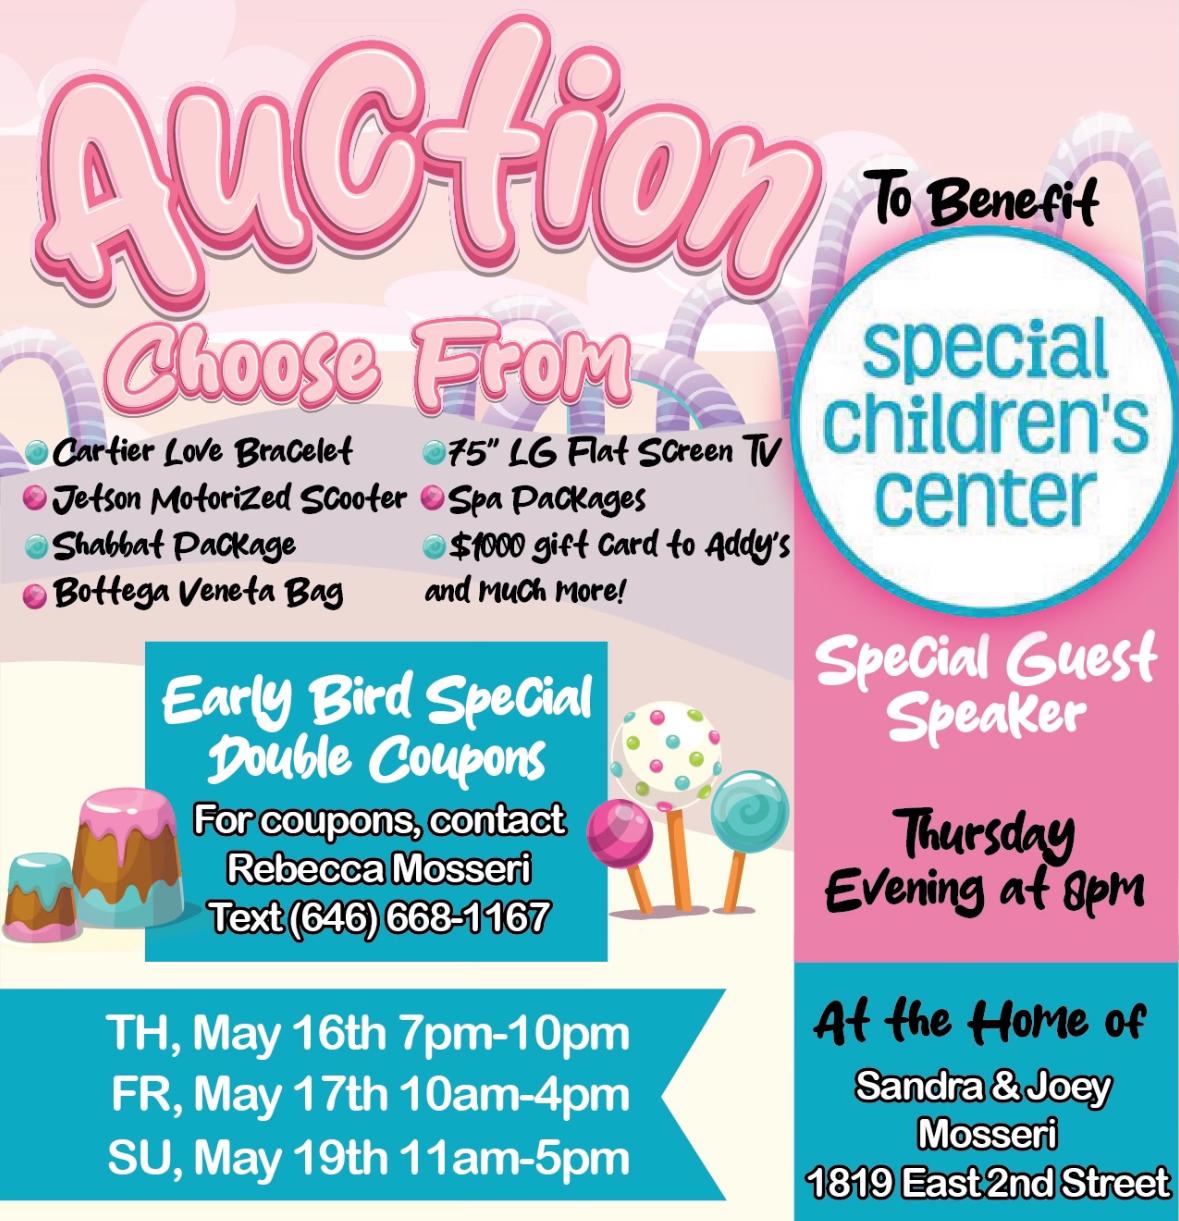 Special Children's Center Auction